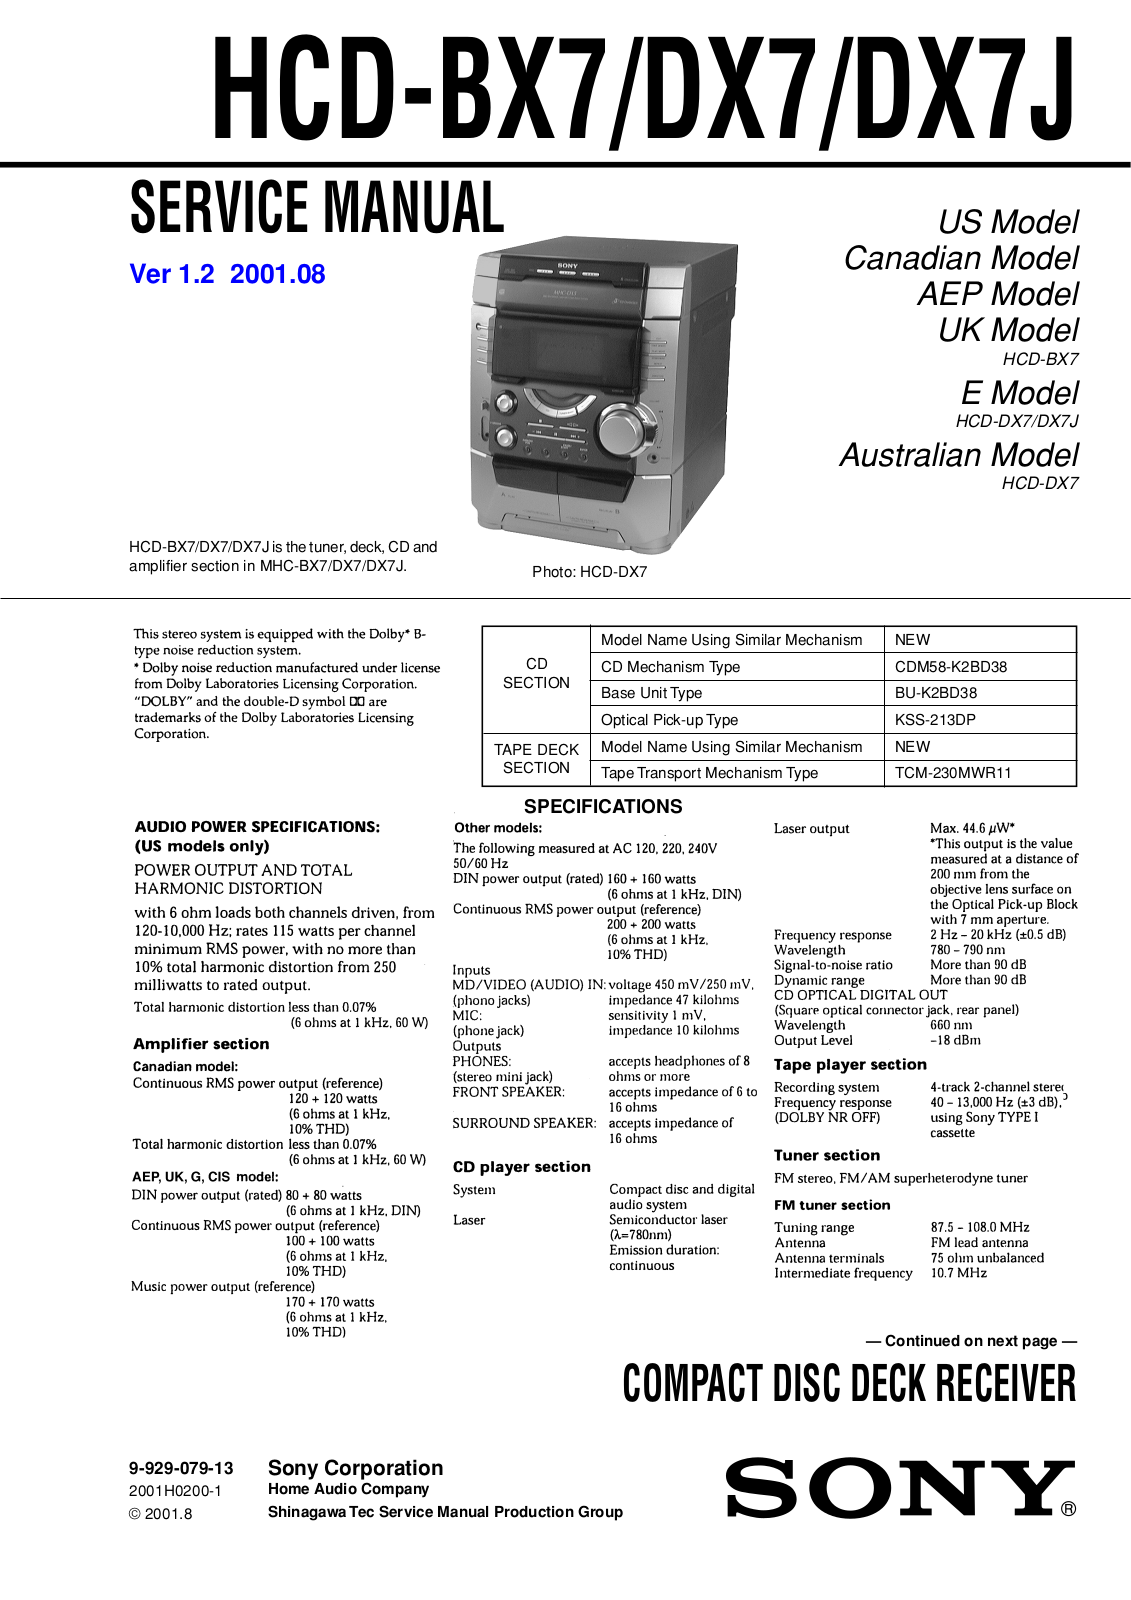 Sony HCD-BX7, HCD-DX7, HCD-DX7J Service manual